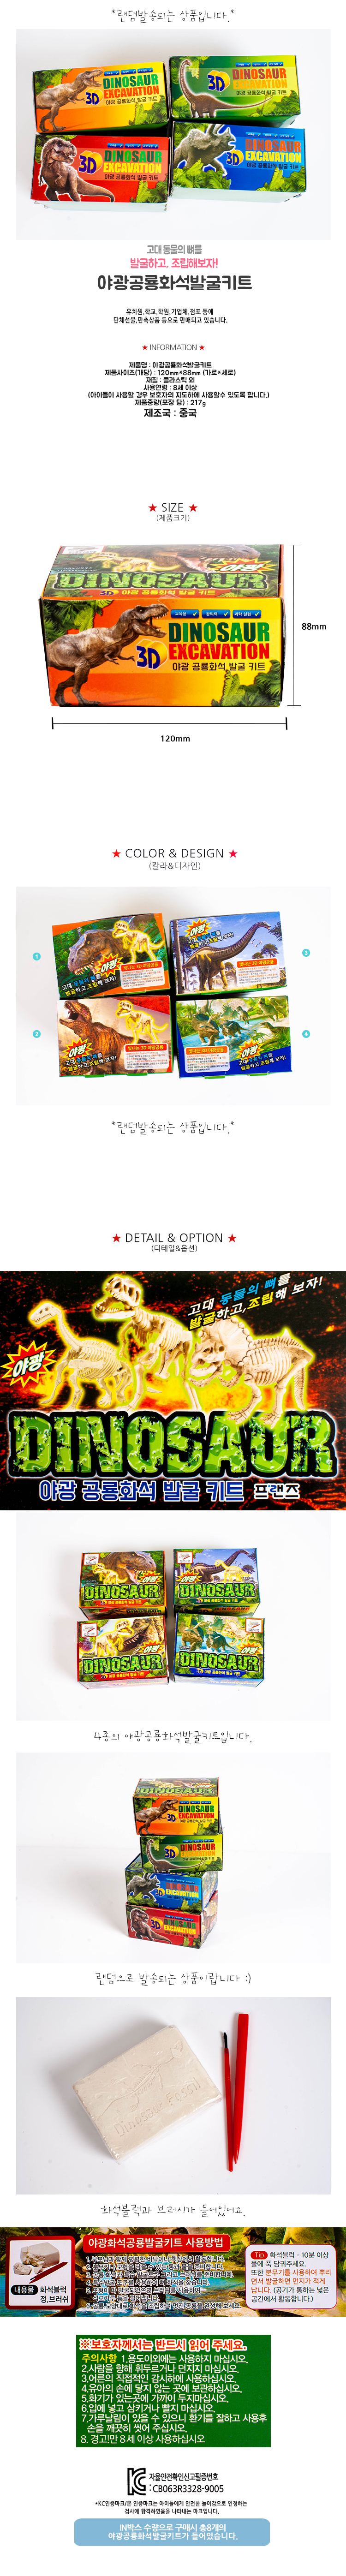 4000neon_dinosaur_kit_154957.jpg